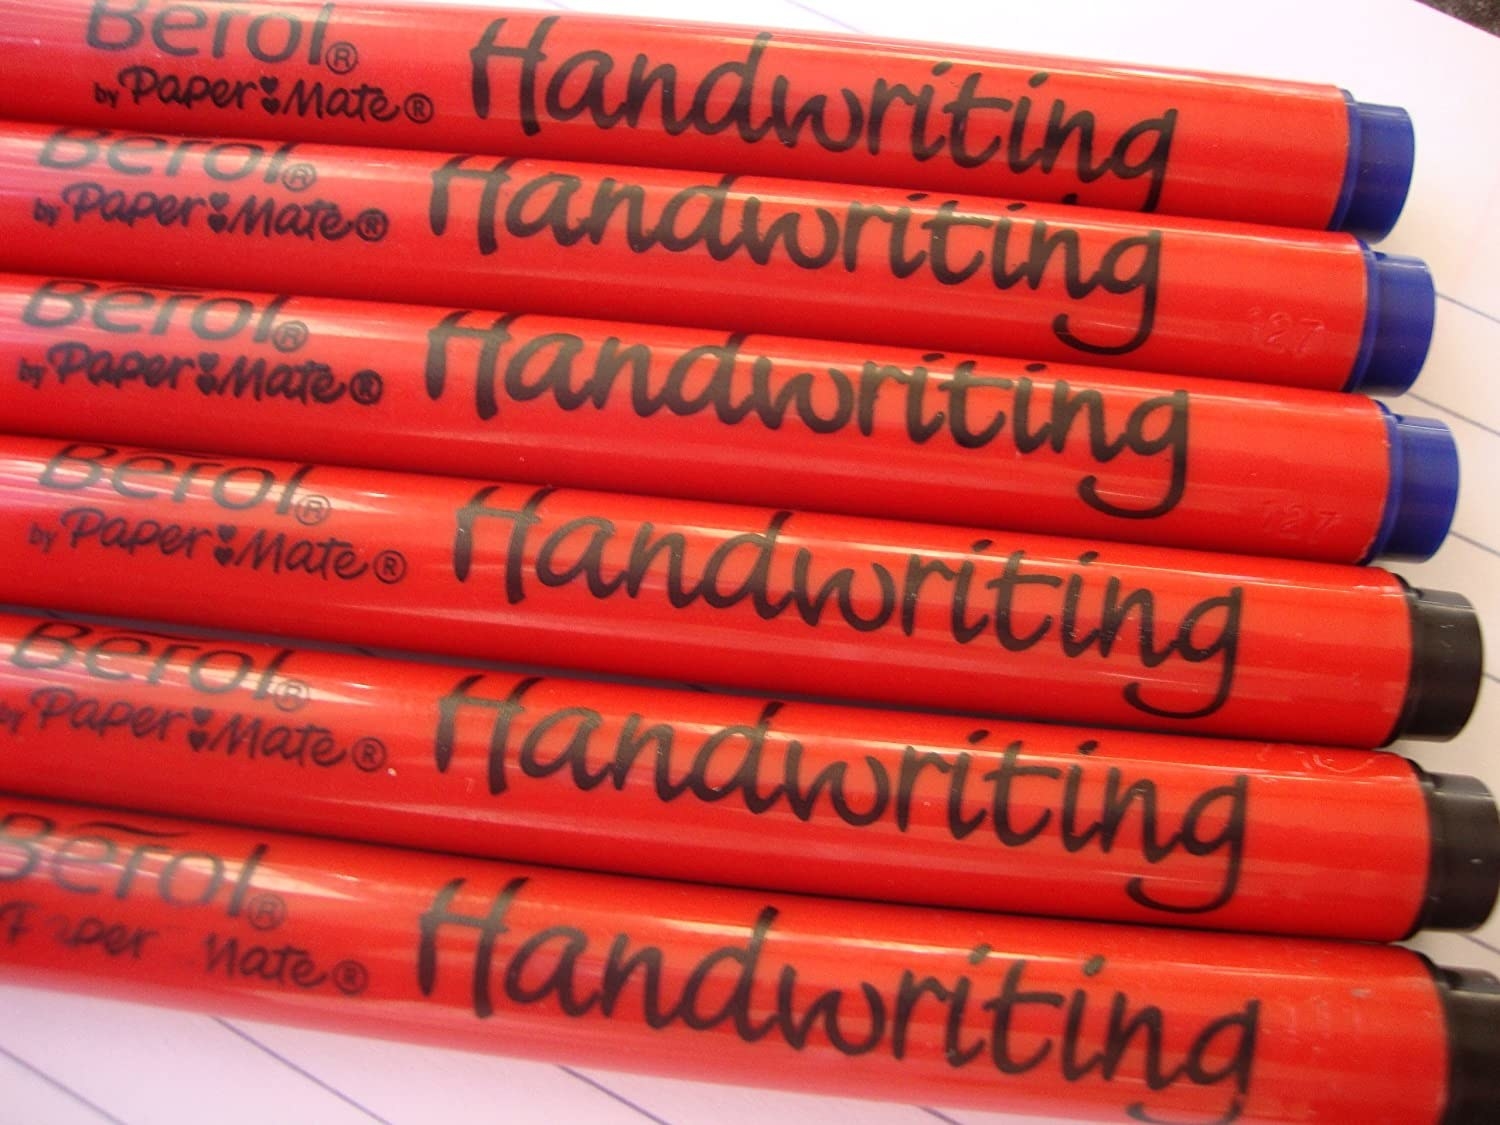 six handwriting pens